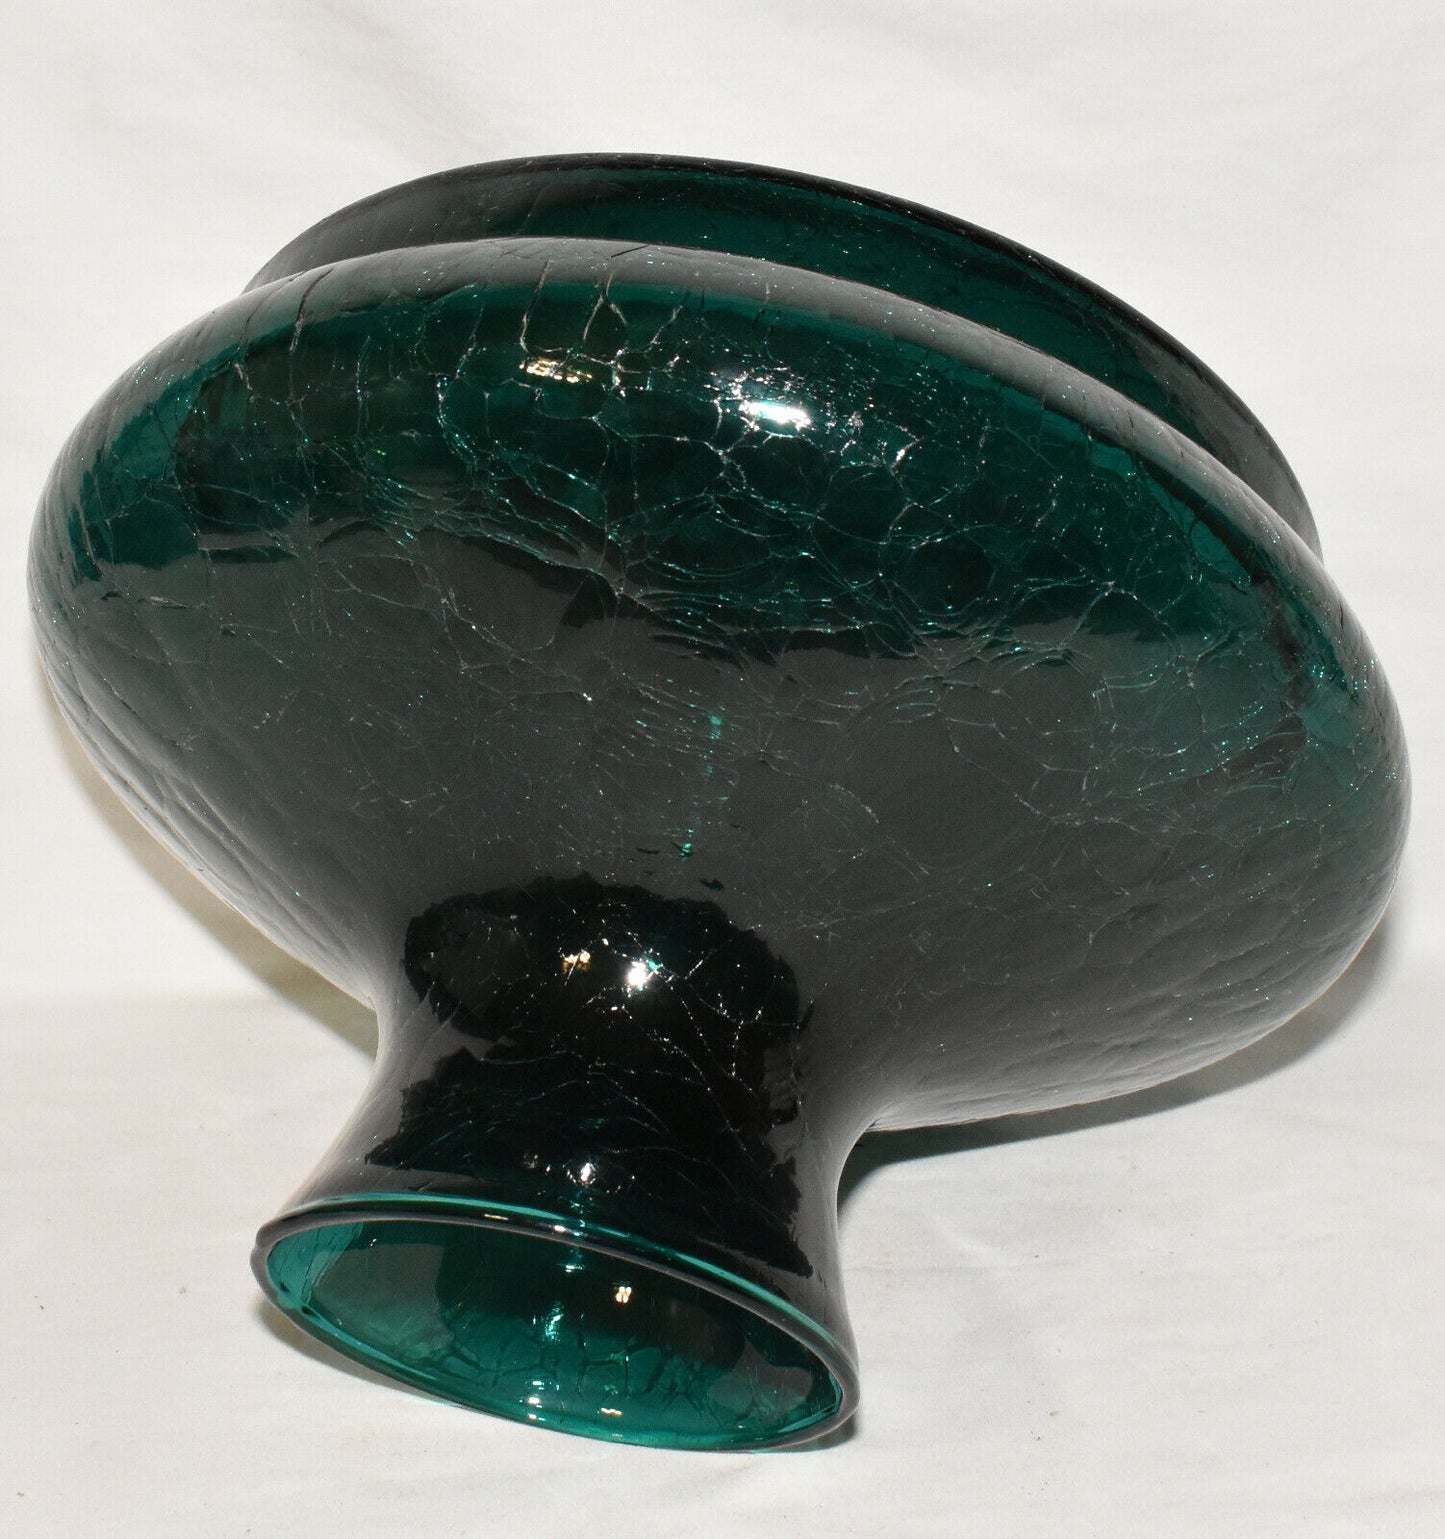 Mid Century Modern Crackle Glass Vase Large Round Spruce Green Centerpiece Vase